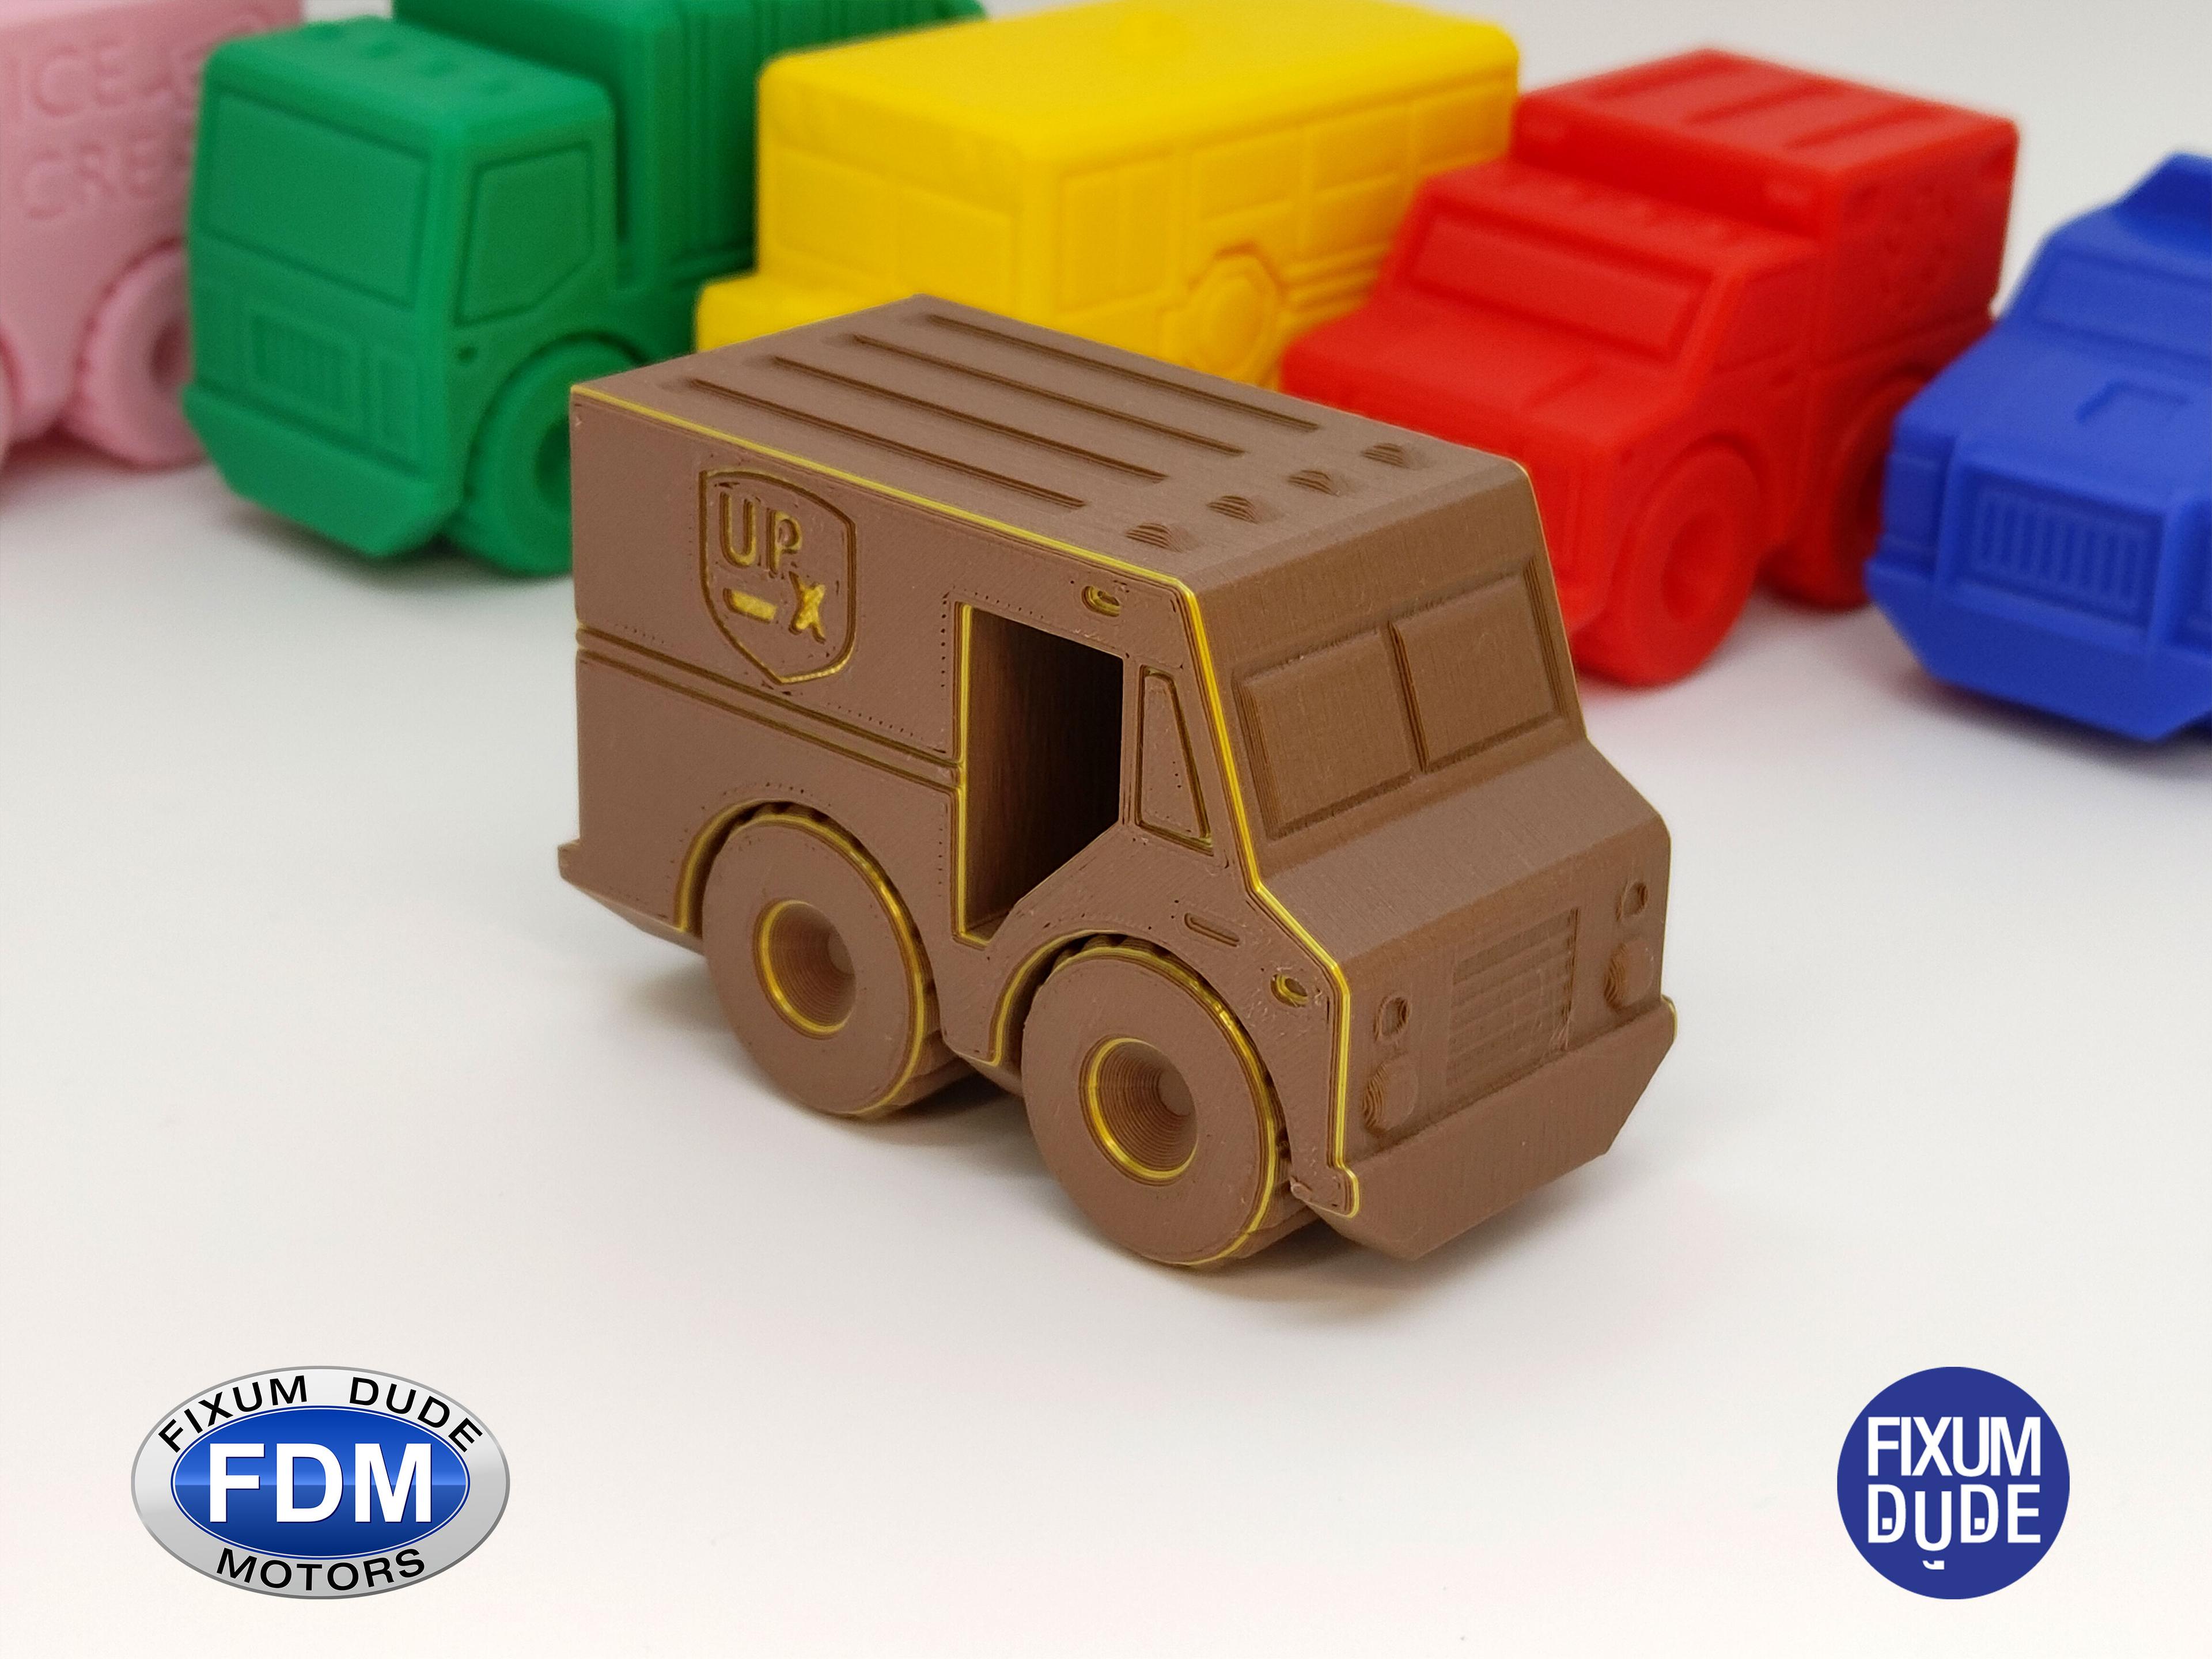 Fixum Dude Motors PIP Package Delivery Truck  3d model